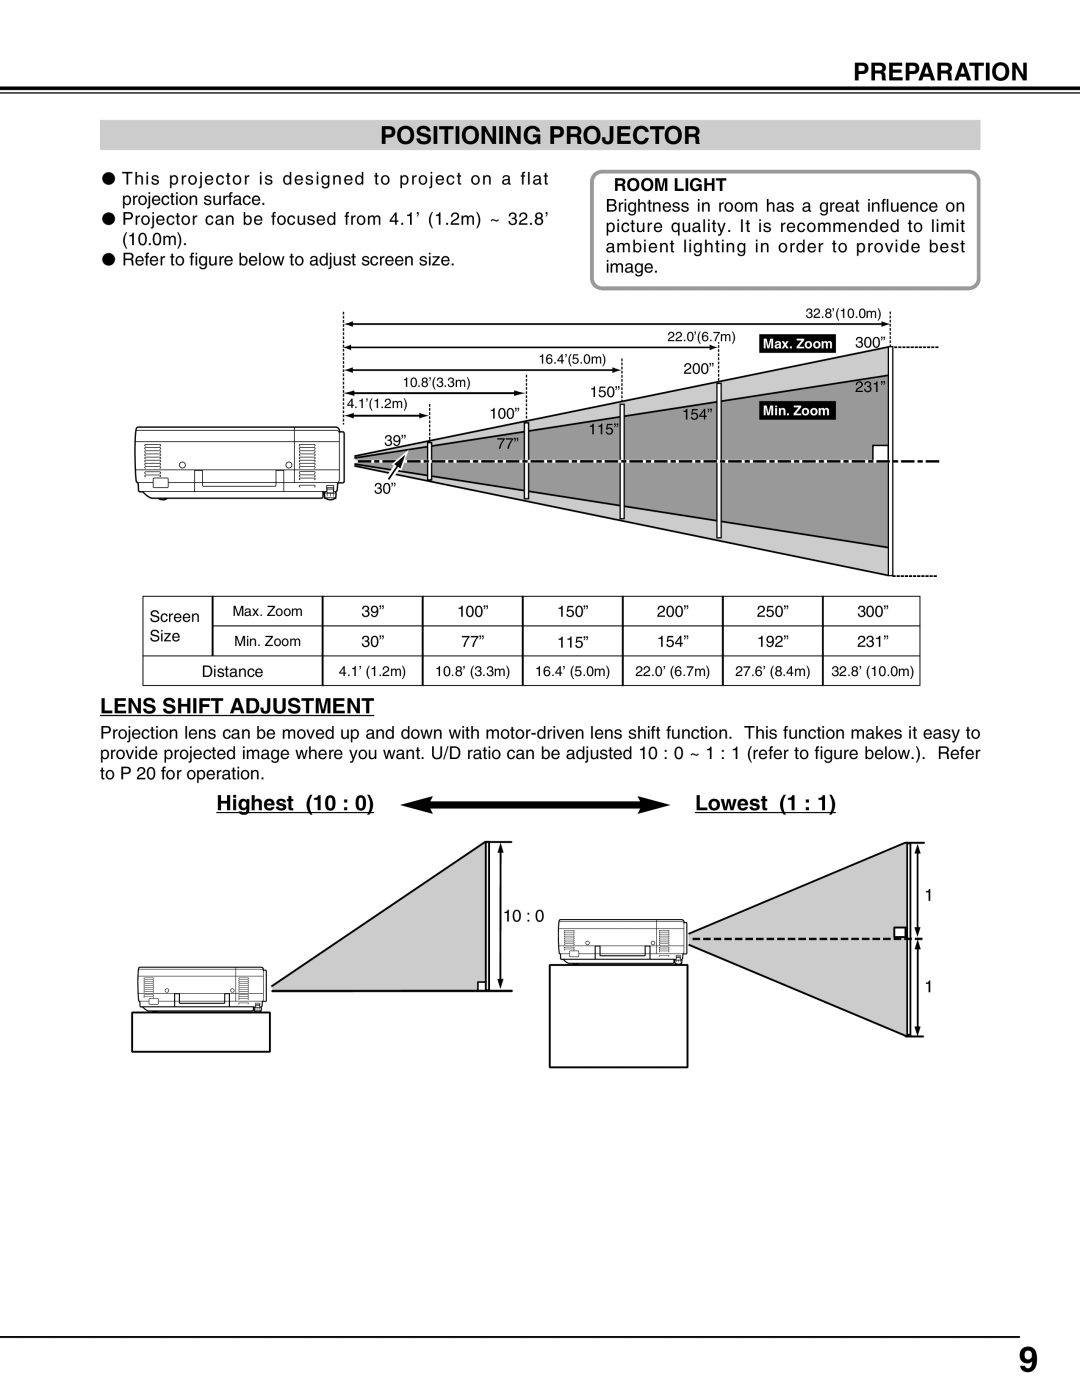 Sanyo PLC-XT16, PLC-XT11 owner manual Preparation Positioning Projector, Lens Shift Adjustment, Highest, Lowest 